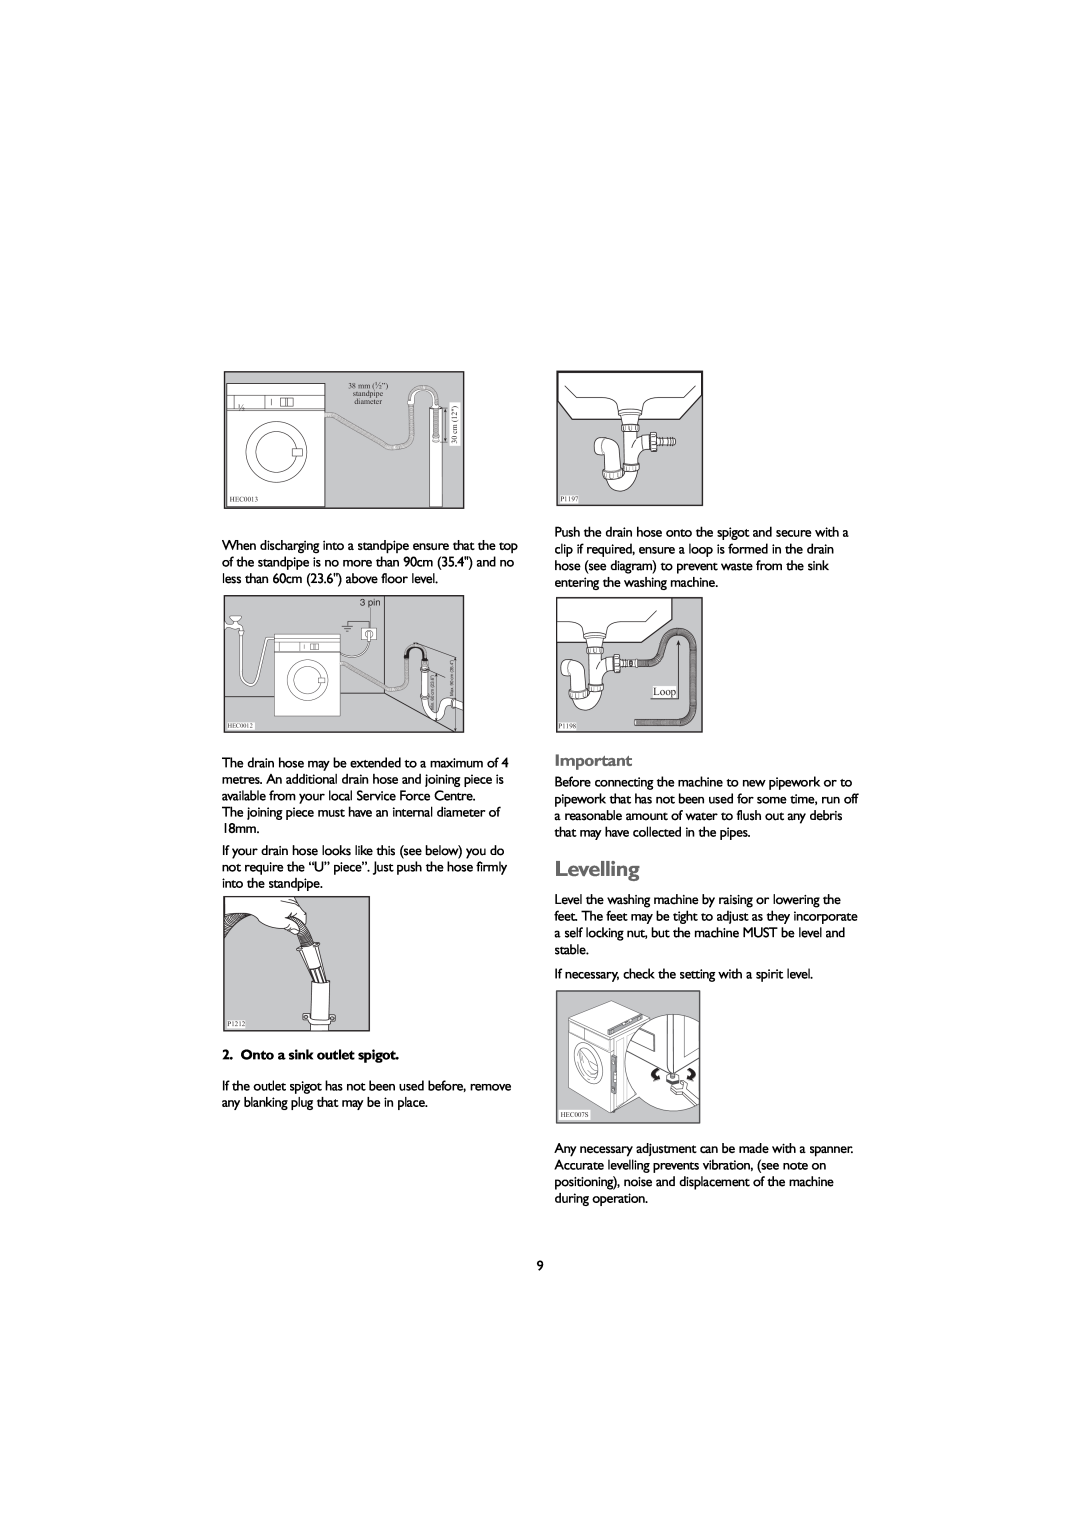 John Lewis JLWM 1203 instruction manual Levelling, Onto a sink outlet spigot 